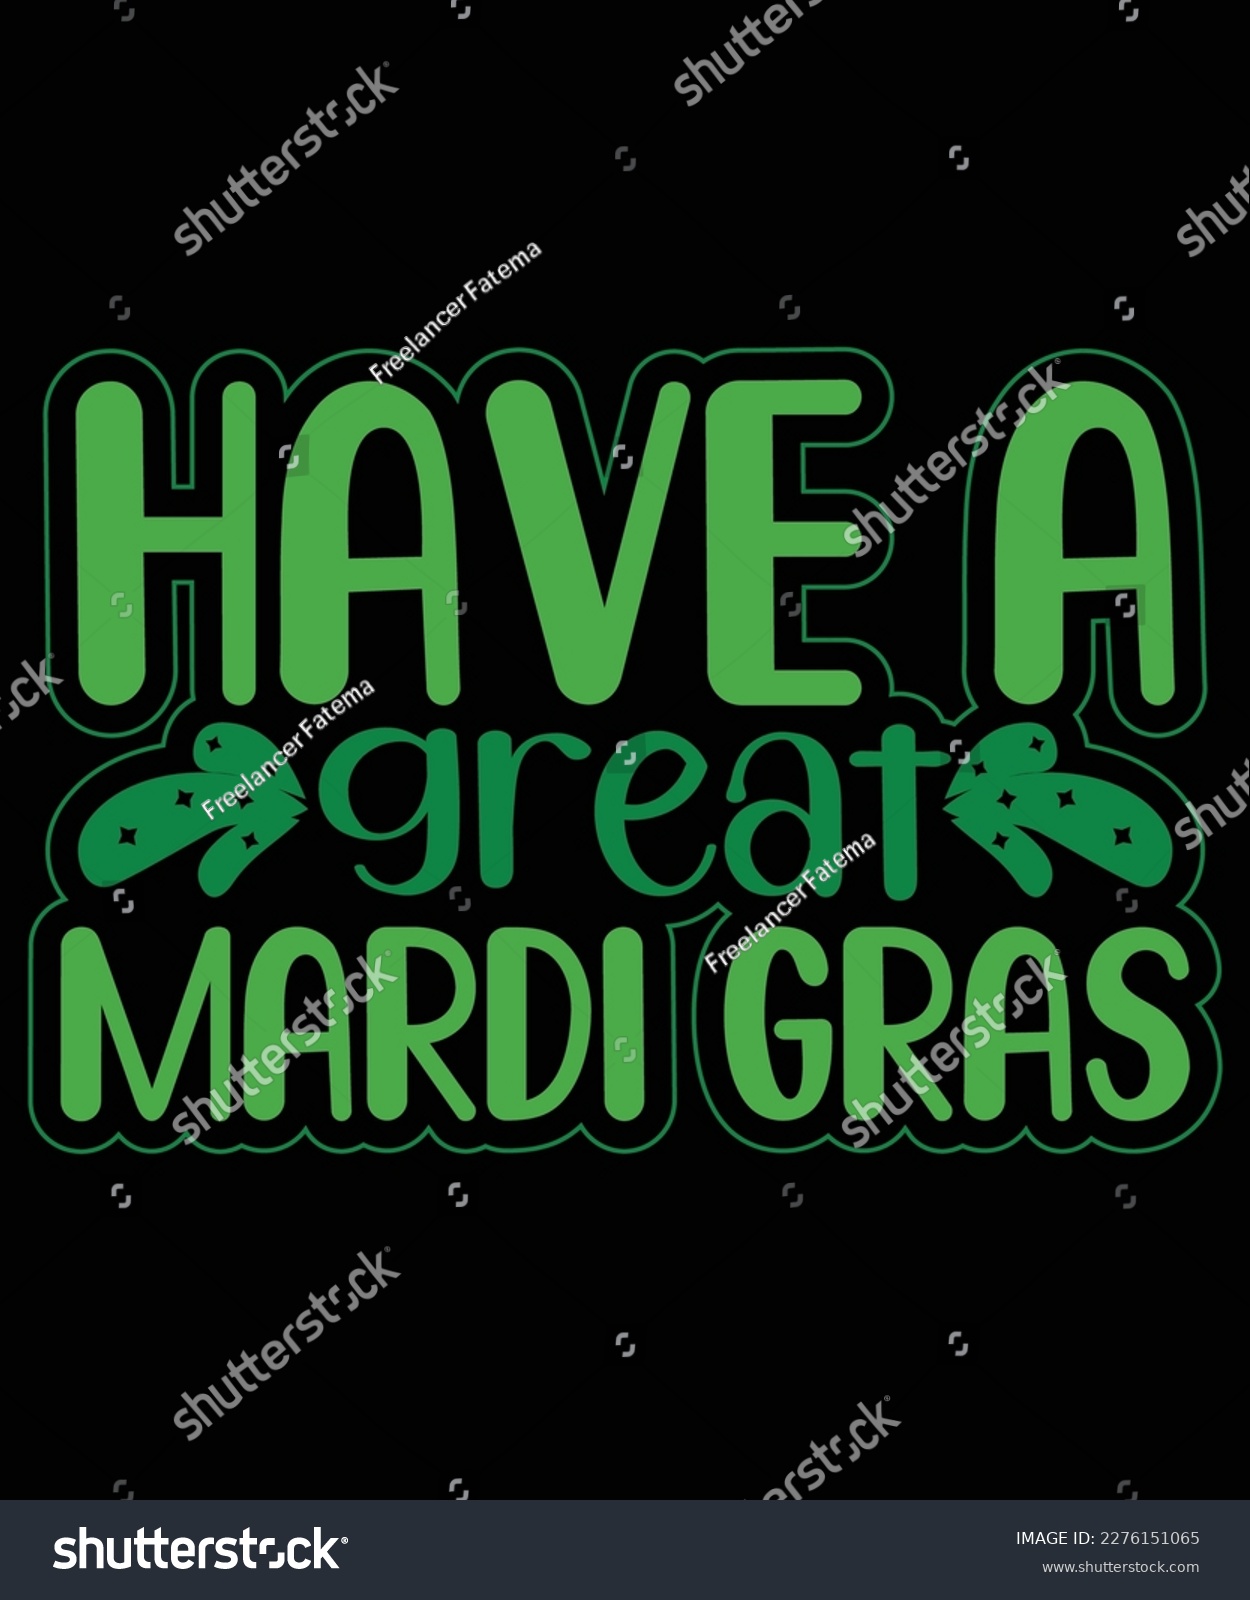 SVG of Have a great Mardi Gras Mardi Gras SVG Design, SVG bundle, Mardi Gras new, free pic, Mardi Gras t-shirt, ready to print, cut file,  T-shirt design bundle, new SVG design svg